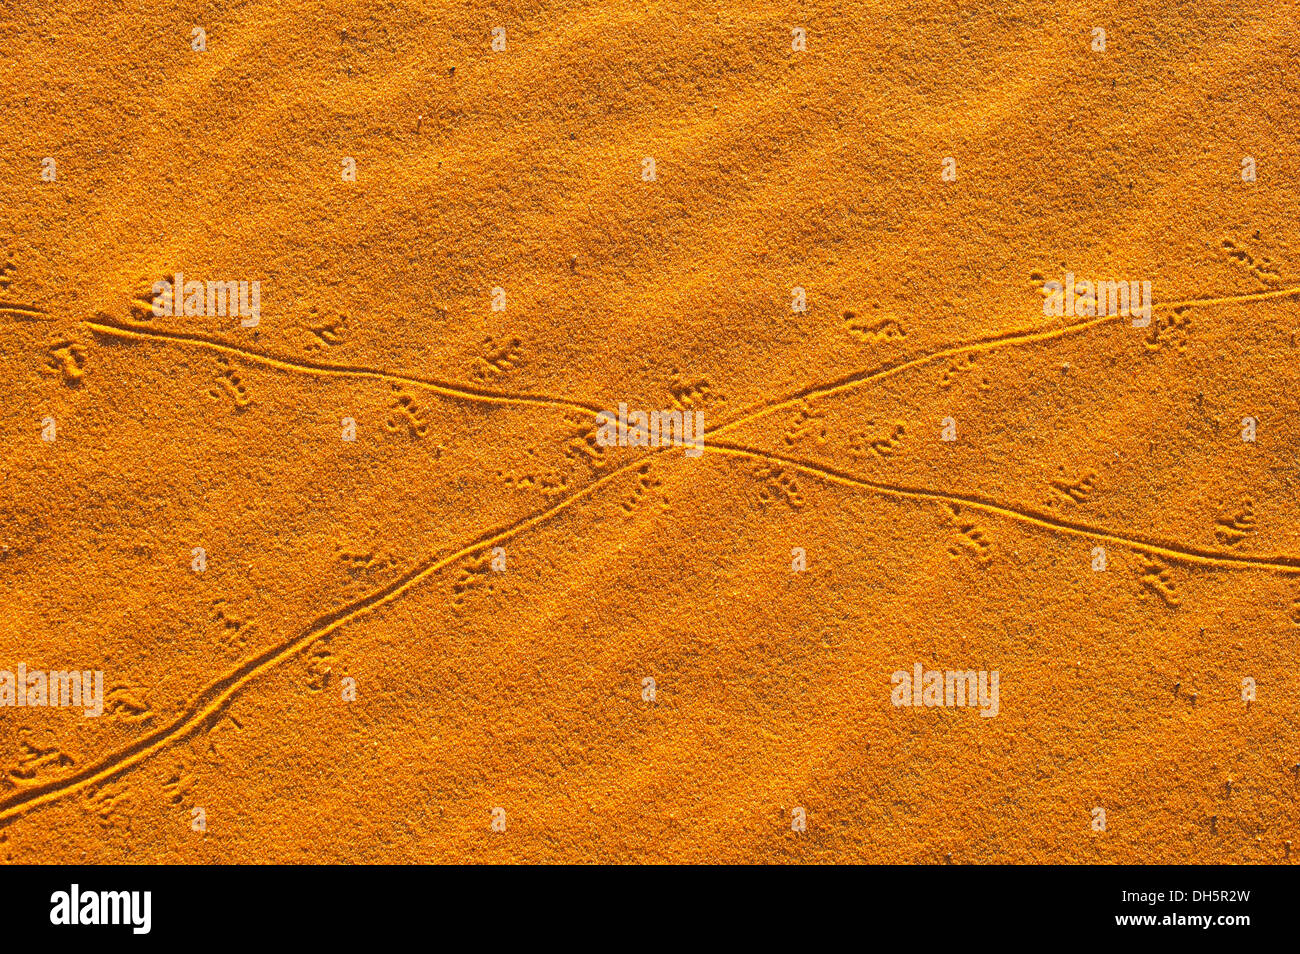 Tracks of a small lizard in the sand dunes of Erg Chebbi, Sahara Desert, Morocco, Africa Stock Photo